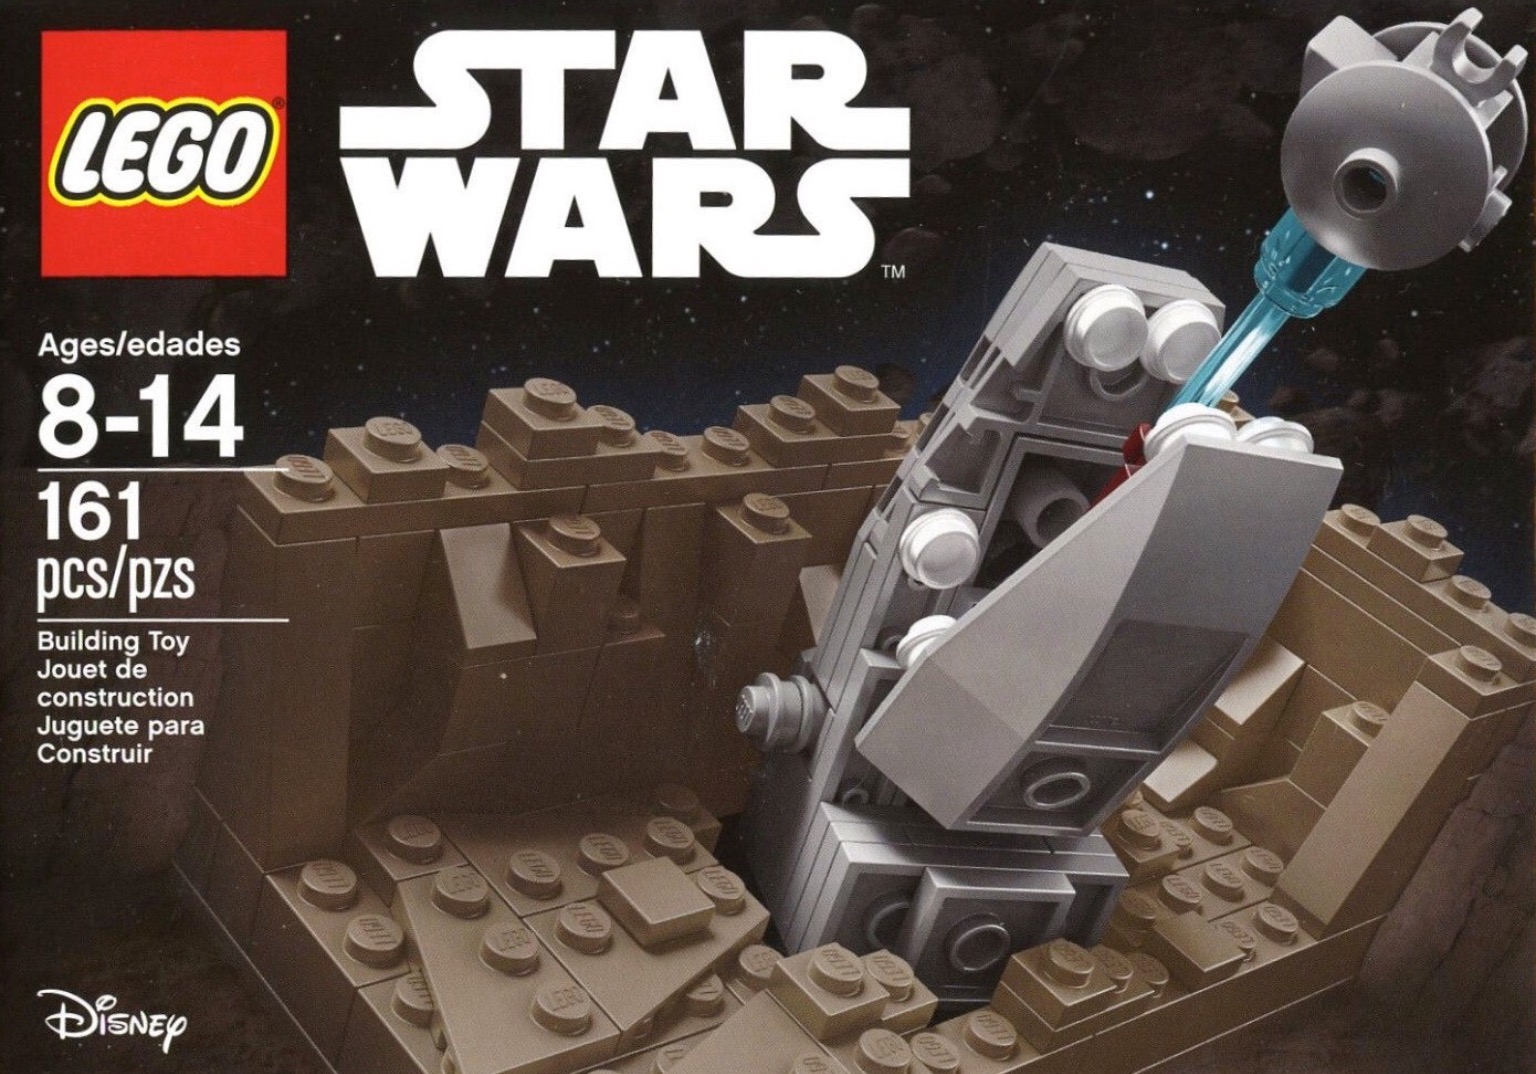 Star Wars Promotional Brickset